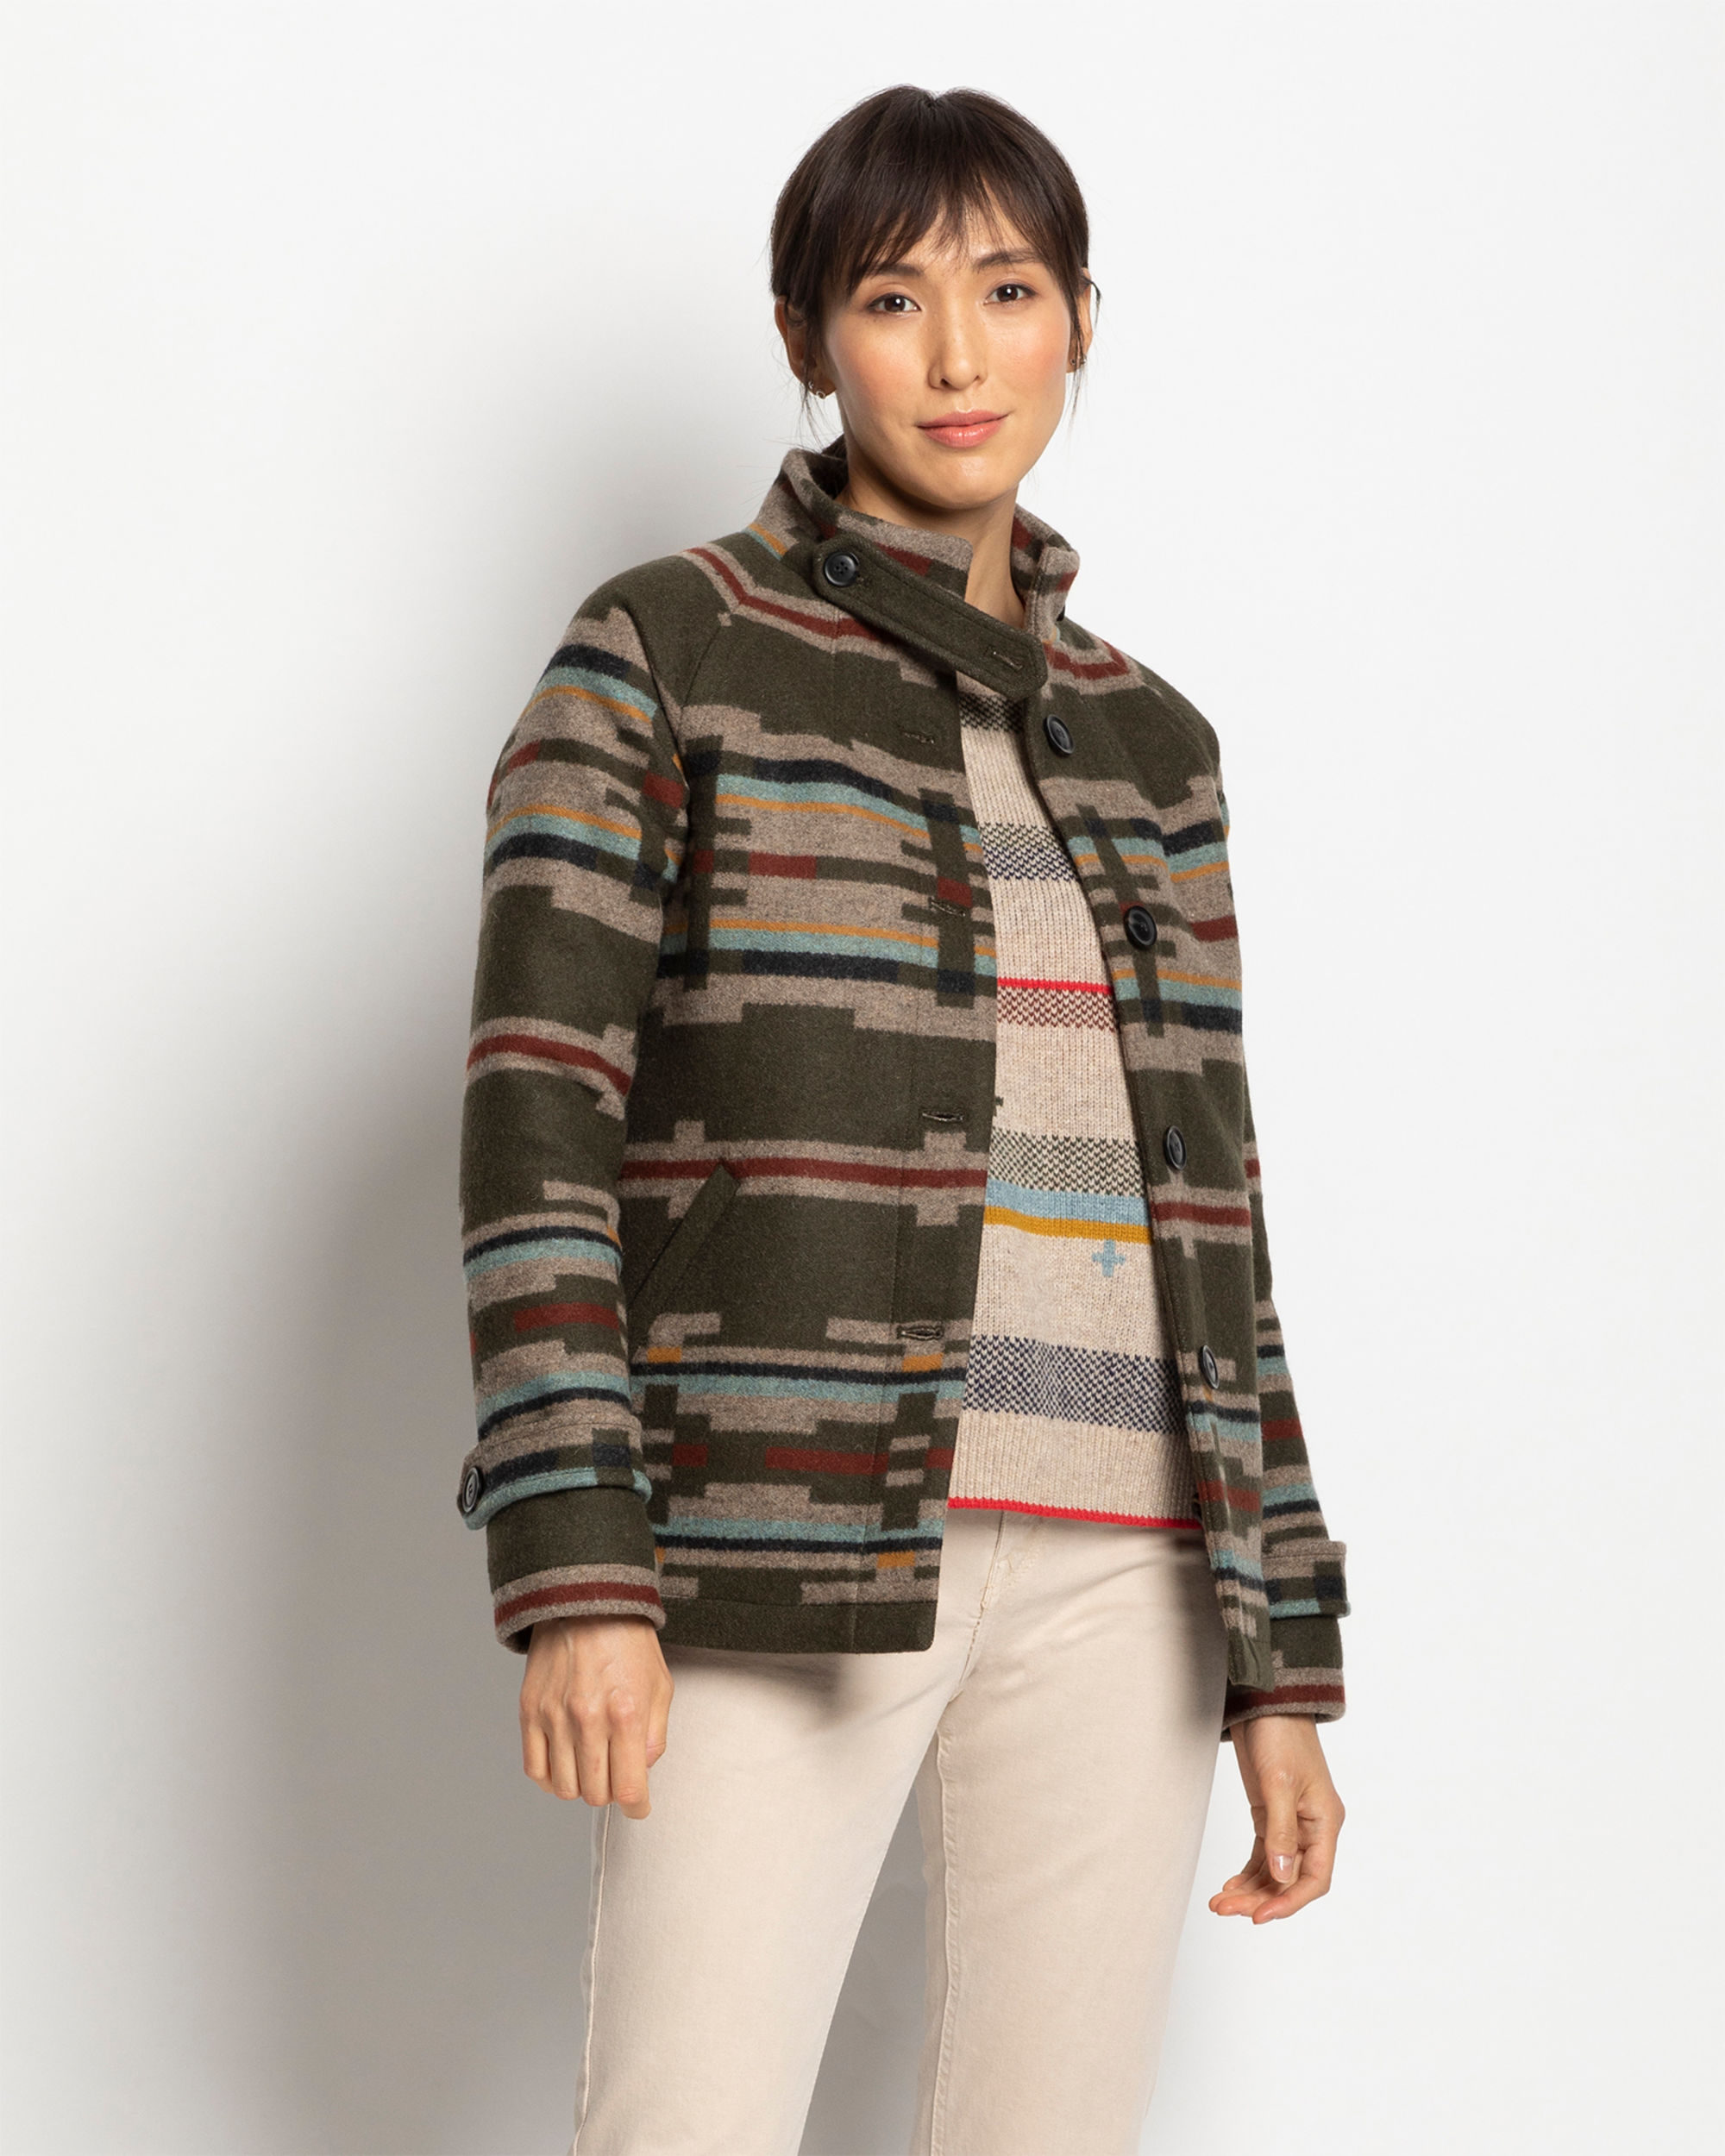 High-Quality Women's Jackets & Coats, Pendleton